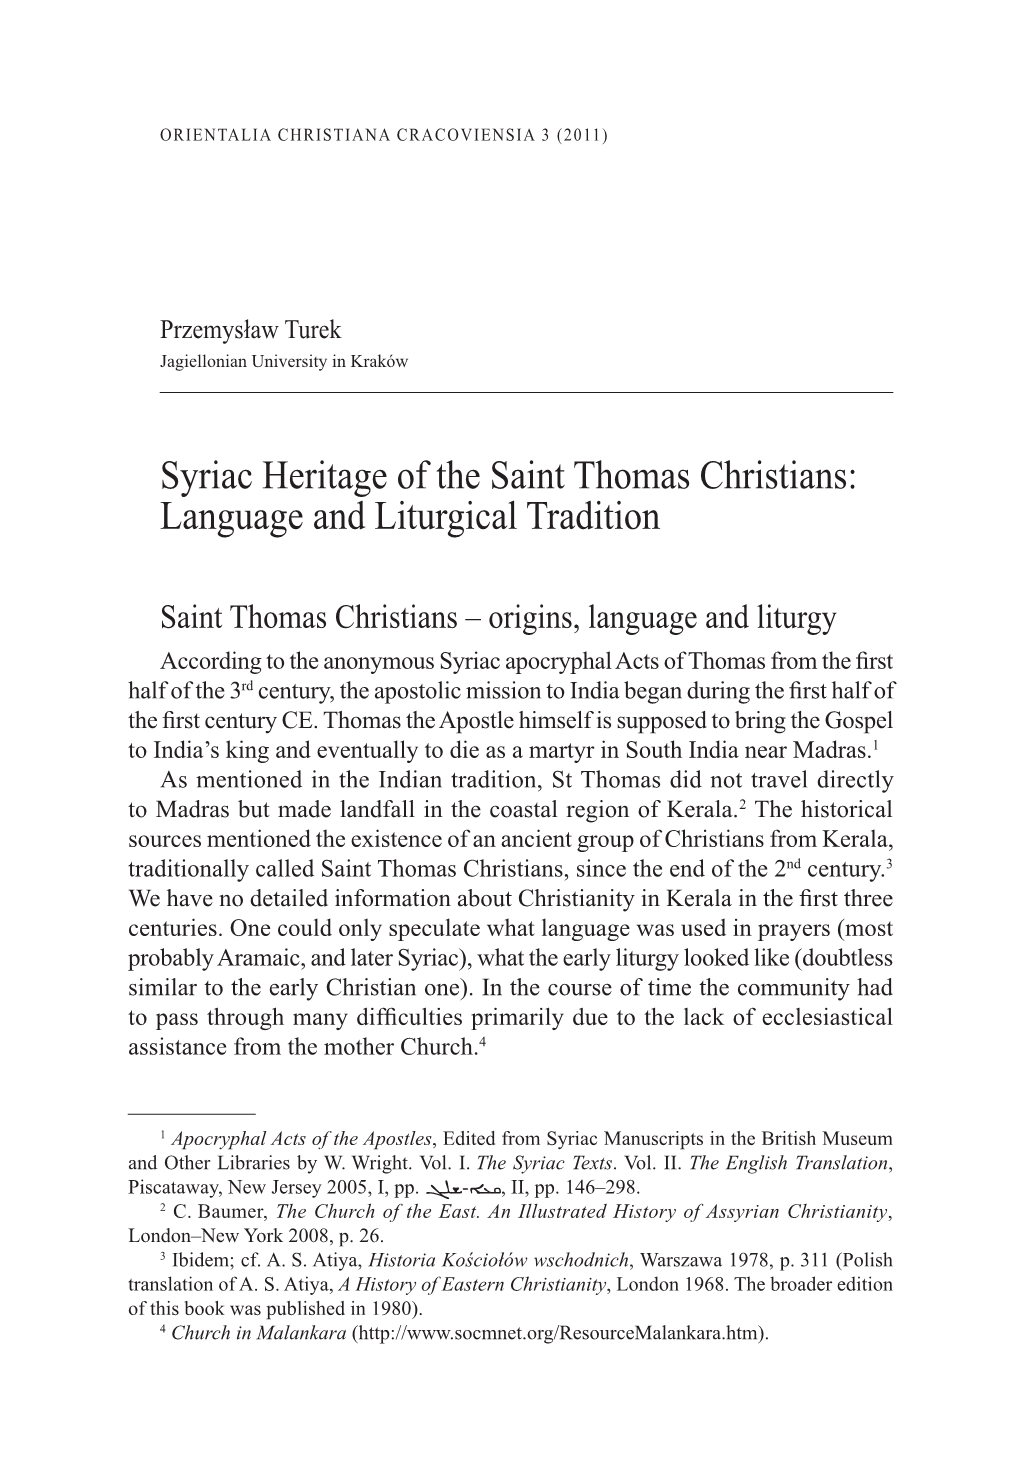 Syriac Heritage of the Saint Thomas Christians: Language and Liturgical Tradition